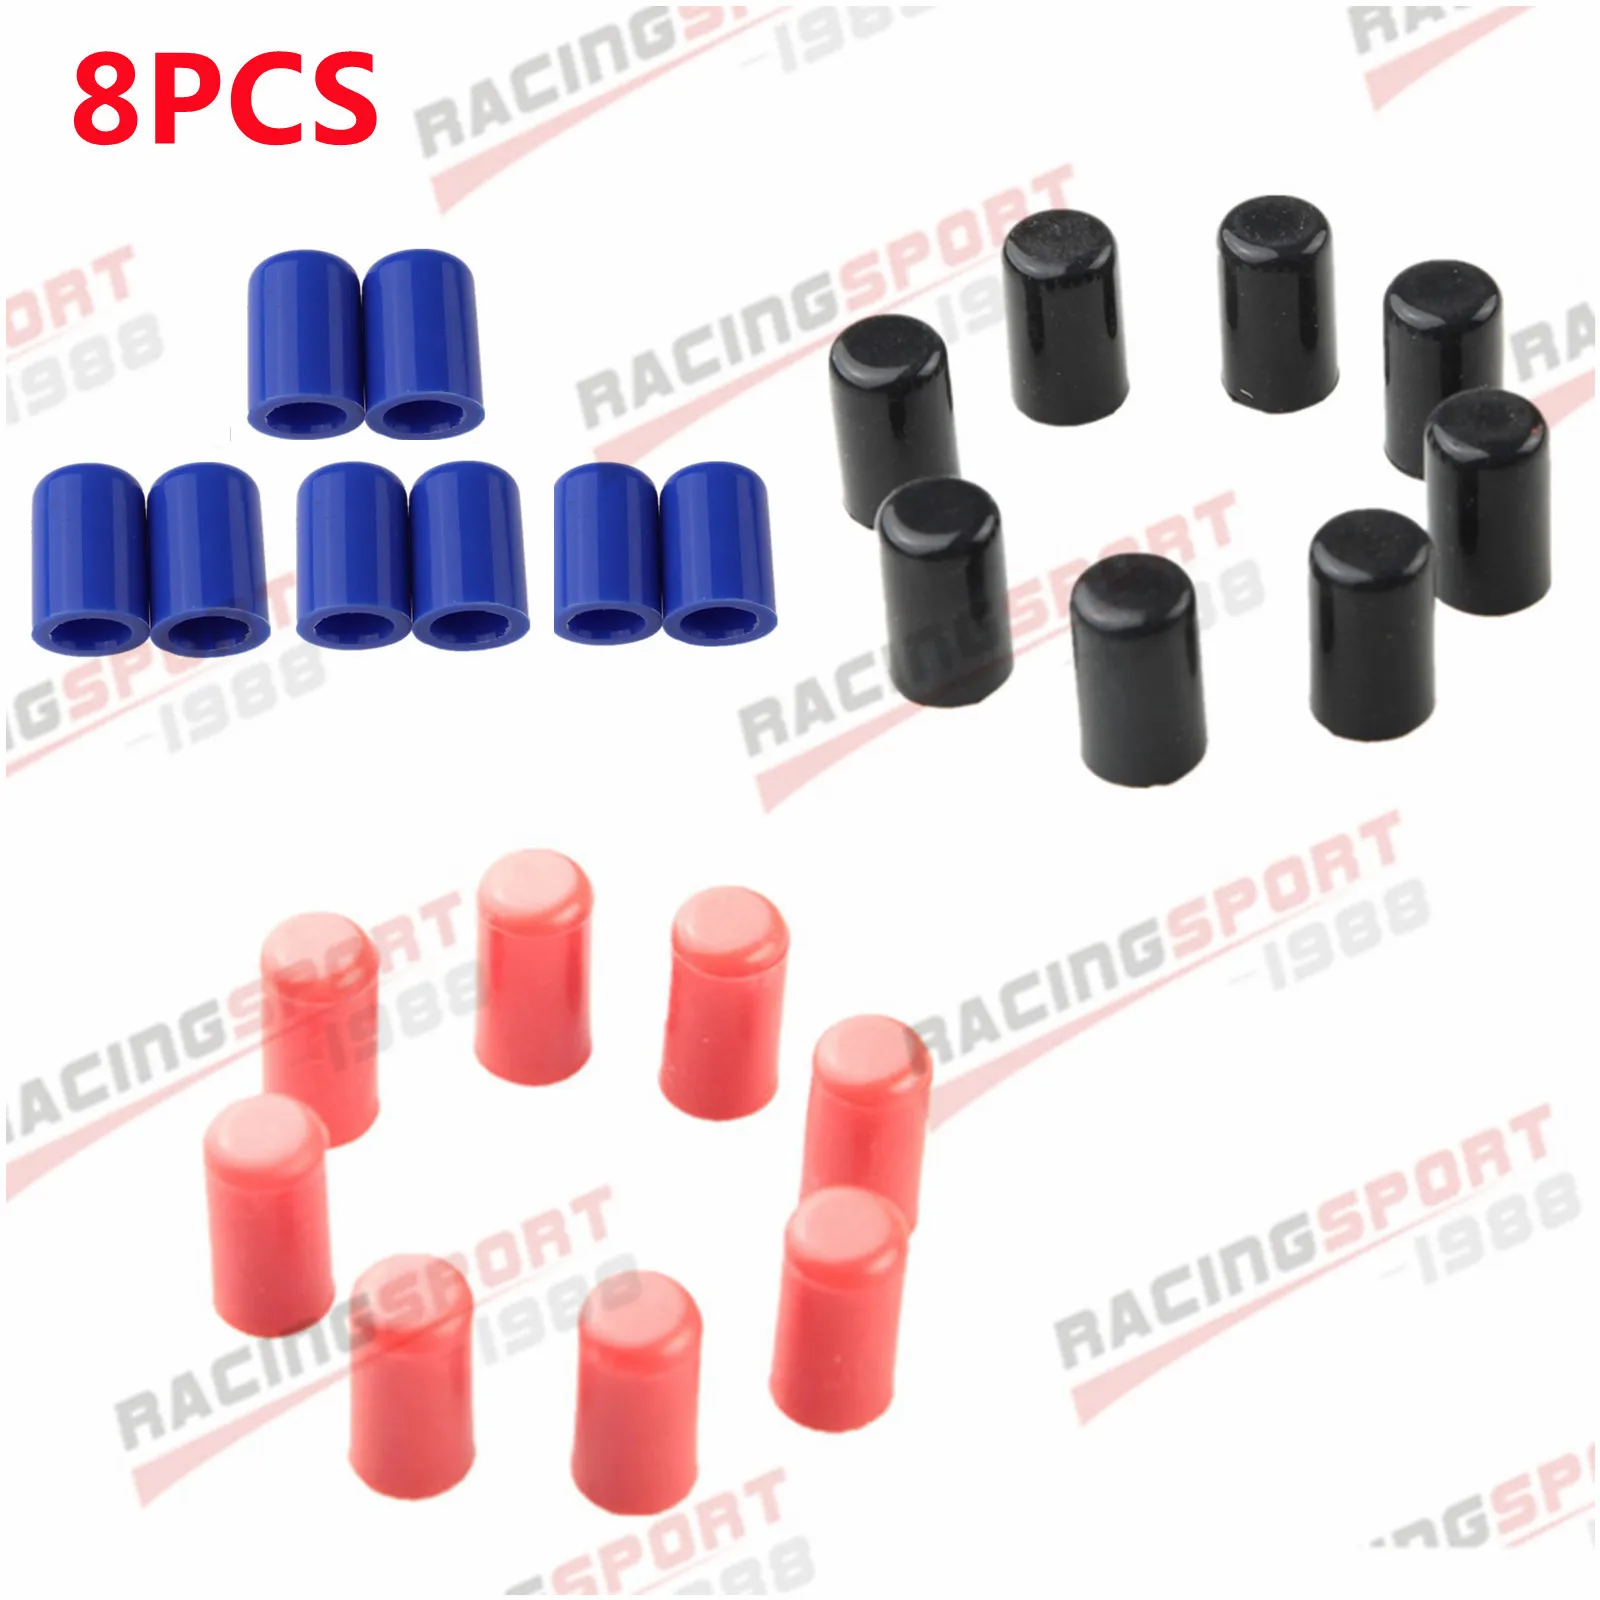 

8PCS 8mm 5/16" Silicone Blanking Cap Intake Vacuum Hose End Bung Plug Caps Black/Blue/Red